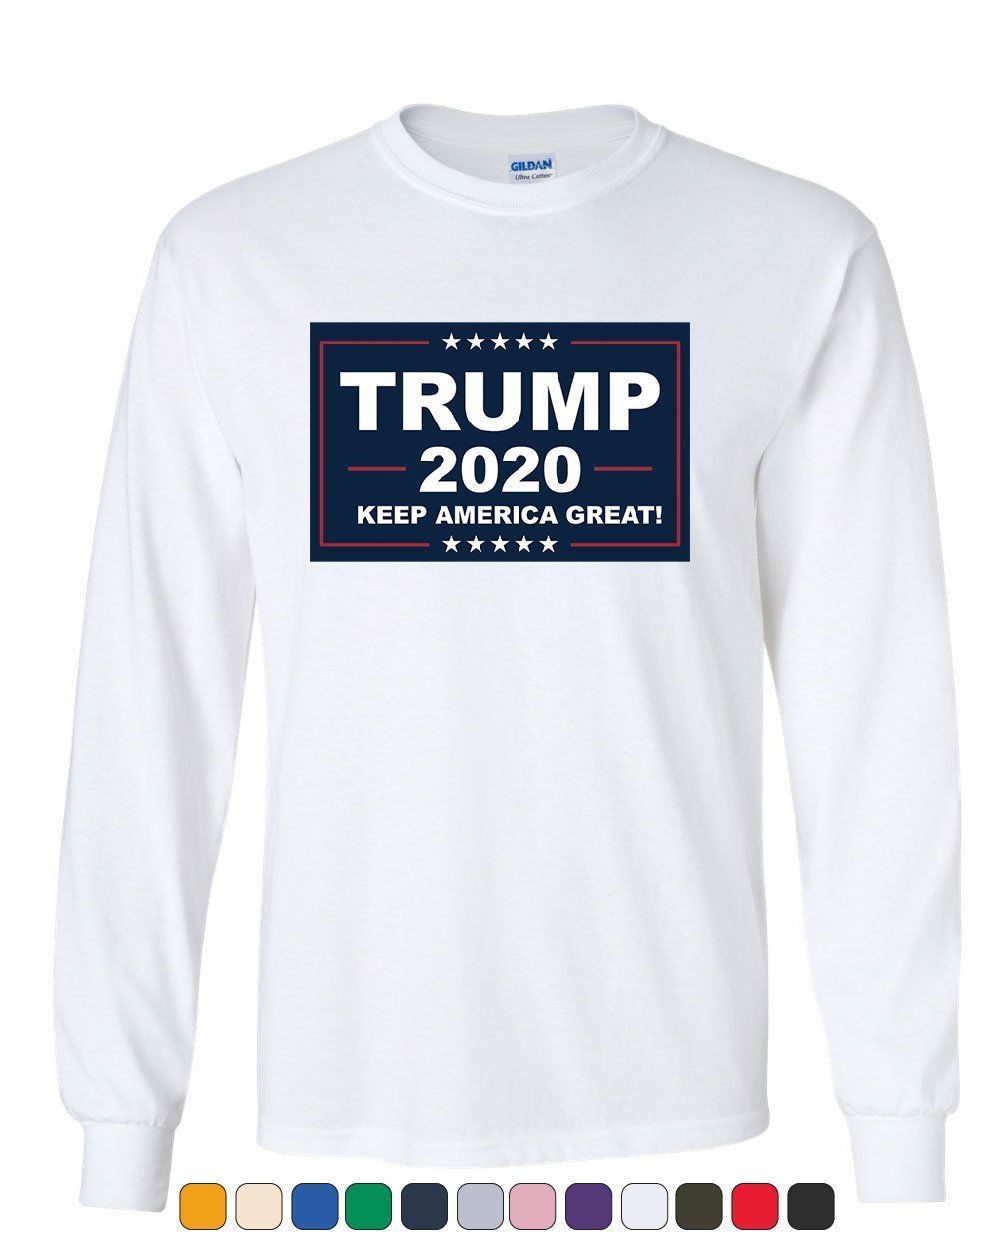 TRUMP 2020 Keep America Great! Long Sleeve T-Shirt MAGA Republican Political Tee